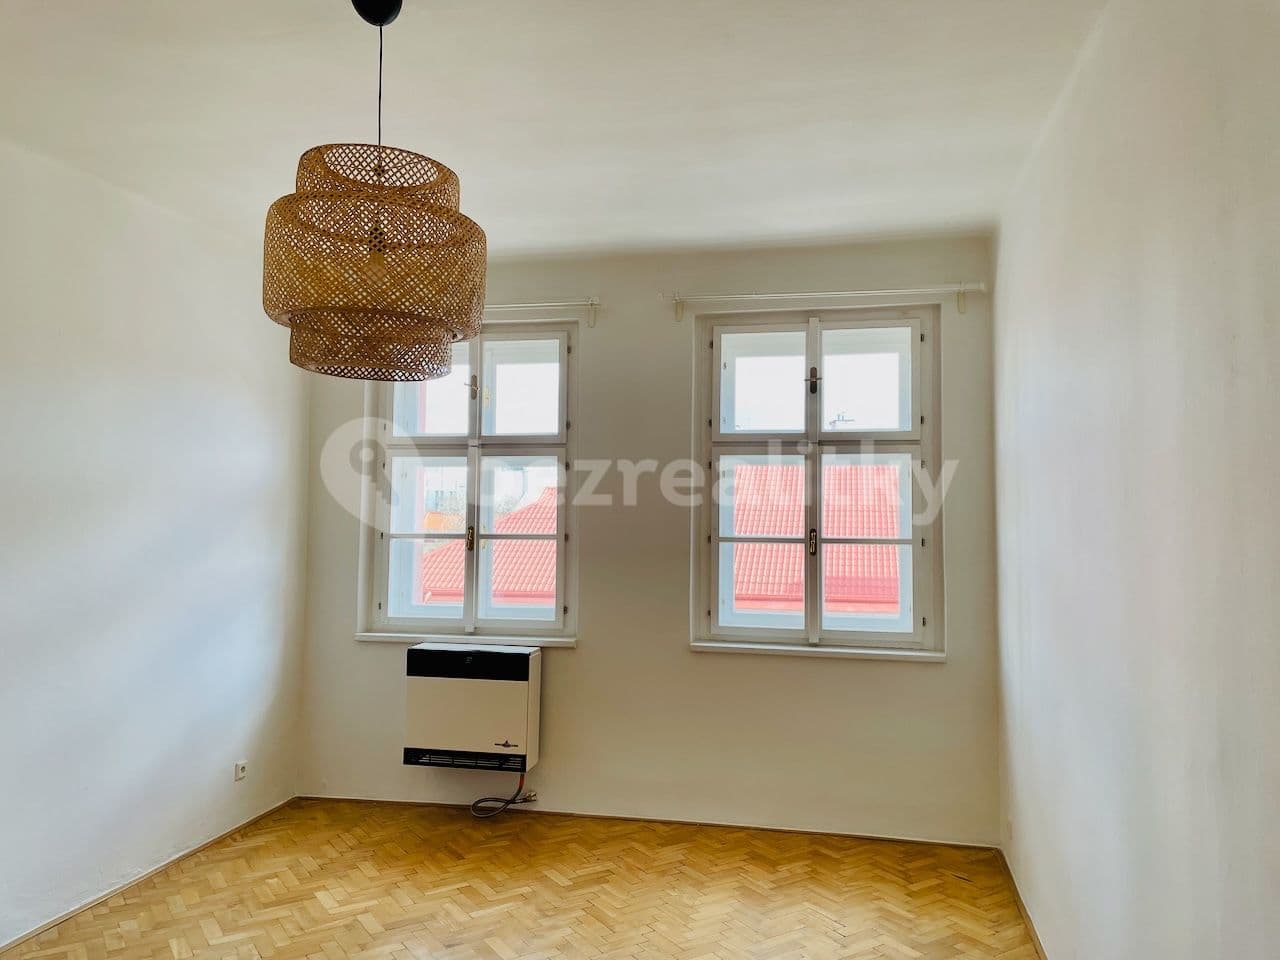 1 bedroom with open-plan kitchen flat to rent, 52 m², Peckova, Prague, Prague